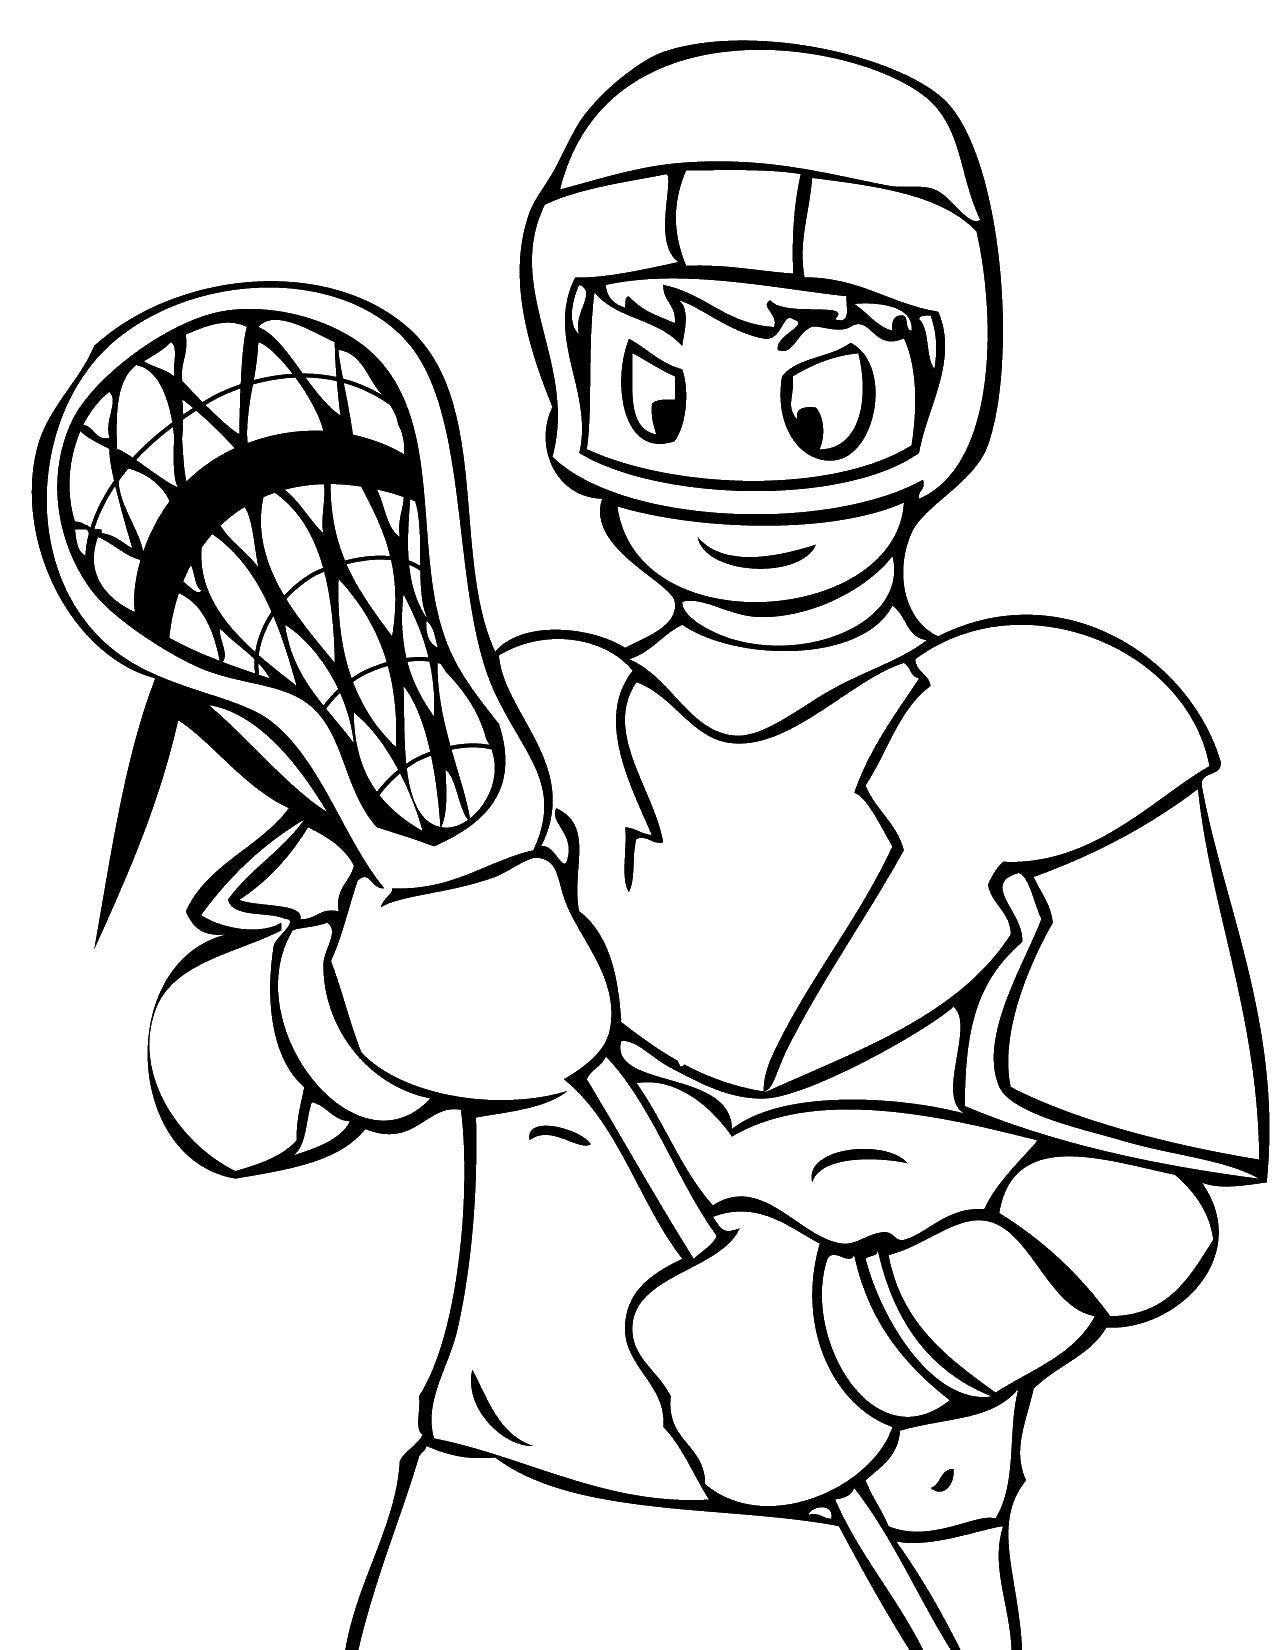 Название: Раскраска Хоккей с мячом. Категория: Спорт. Теги: спорт, хоккей, хоккеист.